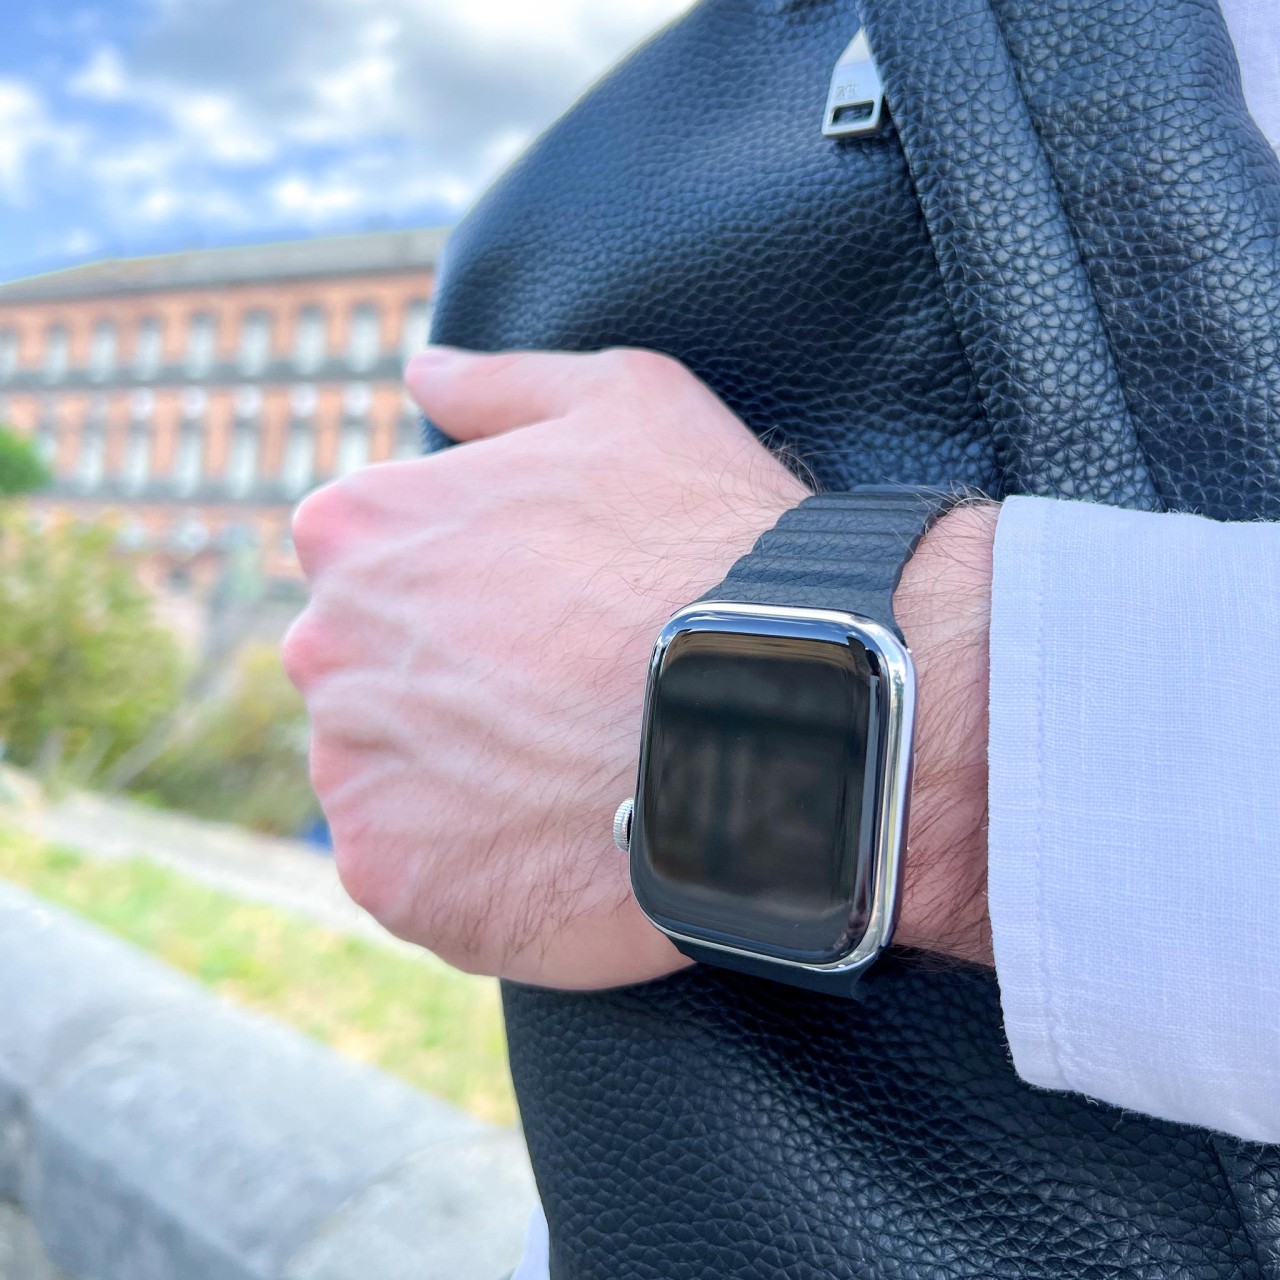 Bracelet Apple Watch croco cuir 100% véritable 42mm marron